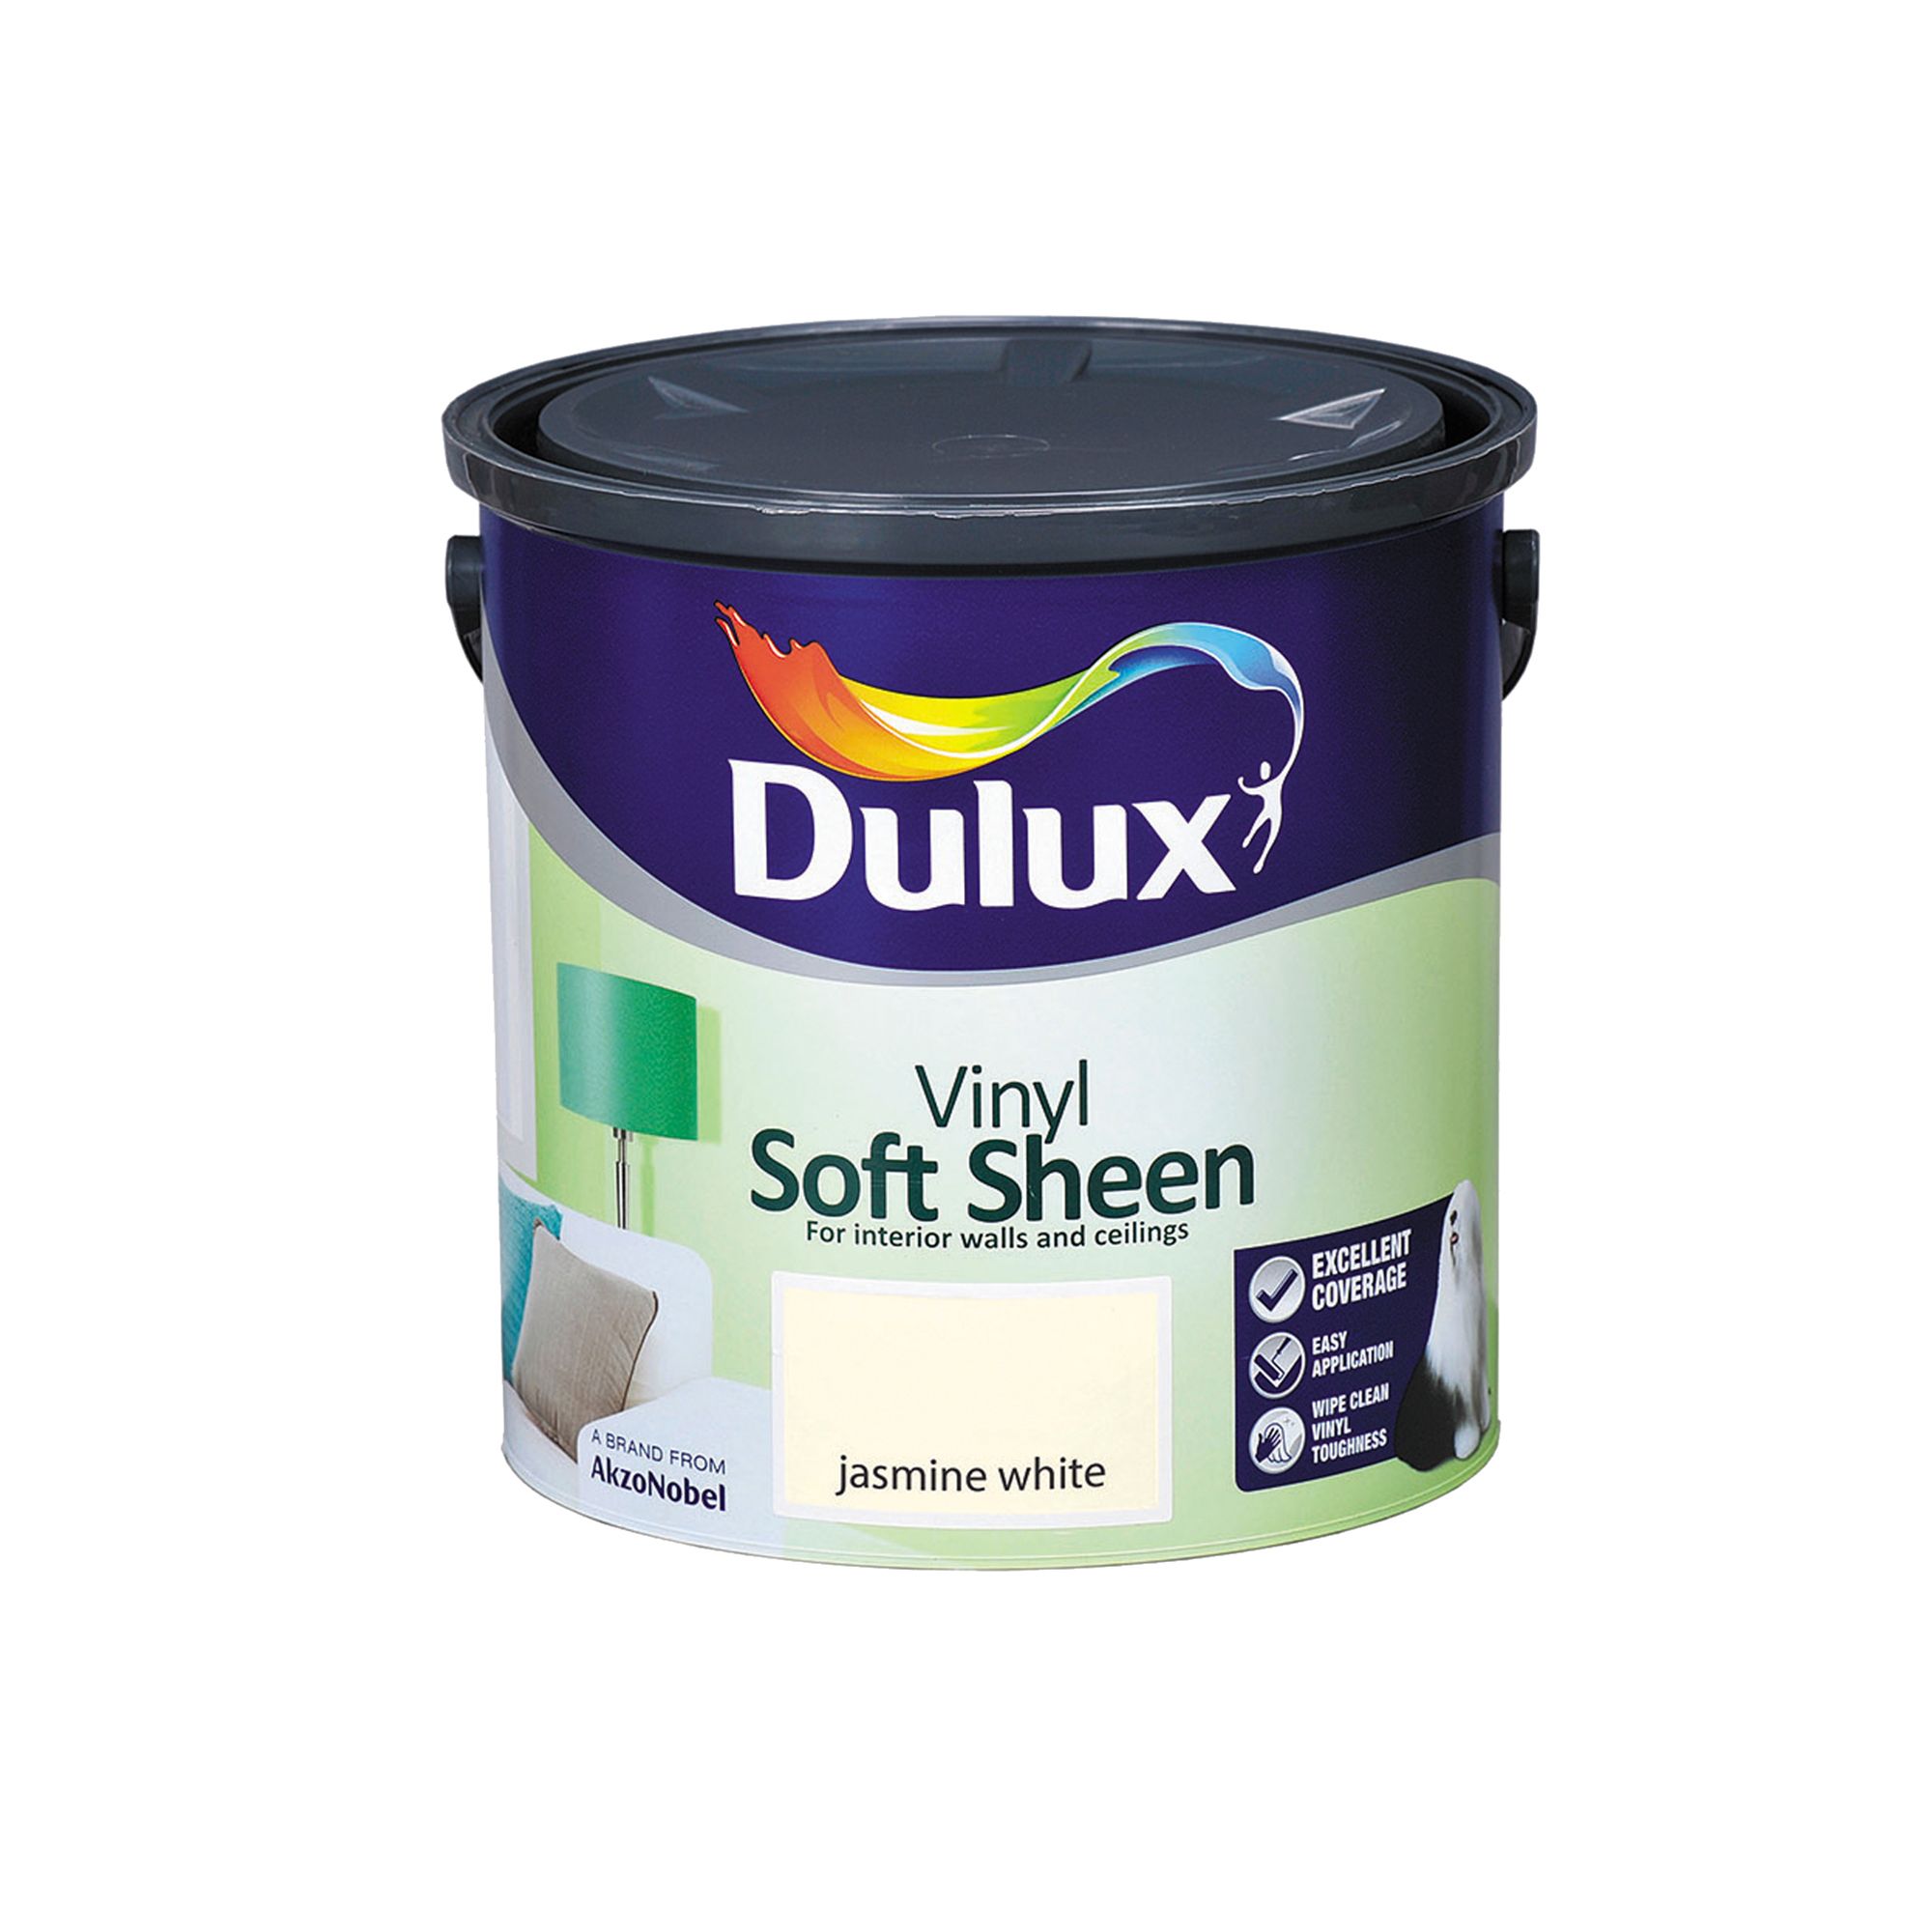 Dulux Jasmine white Soft sheen Emulsion paint, 2.5L